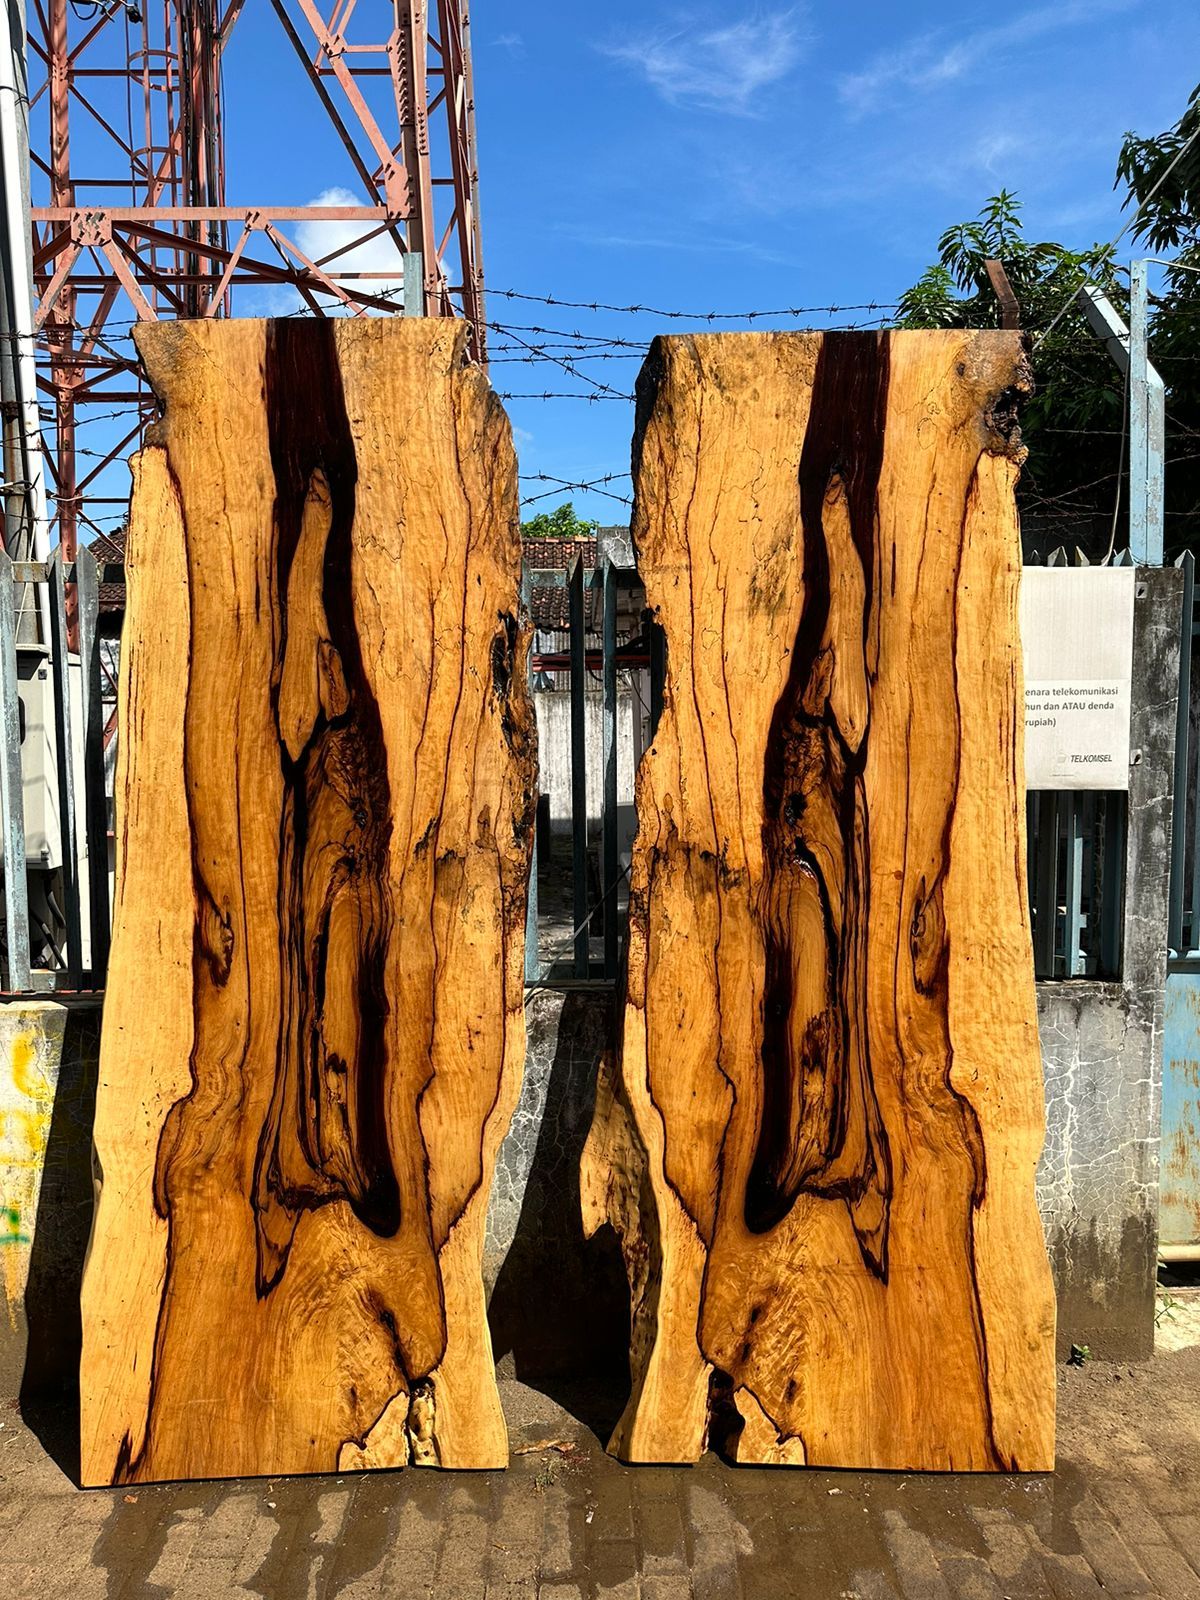 indonesian wood furniture wholesale